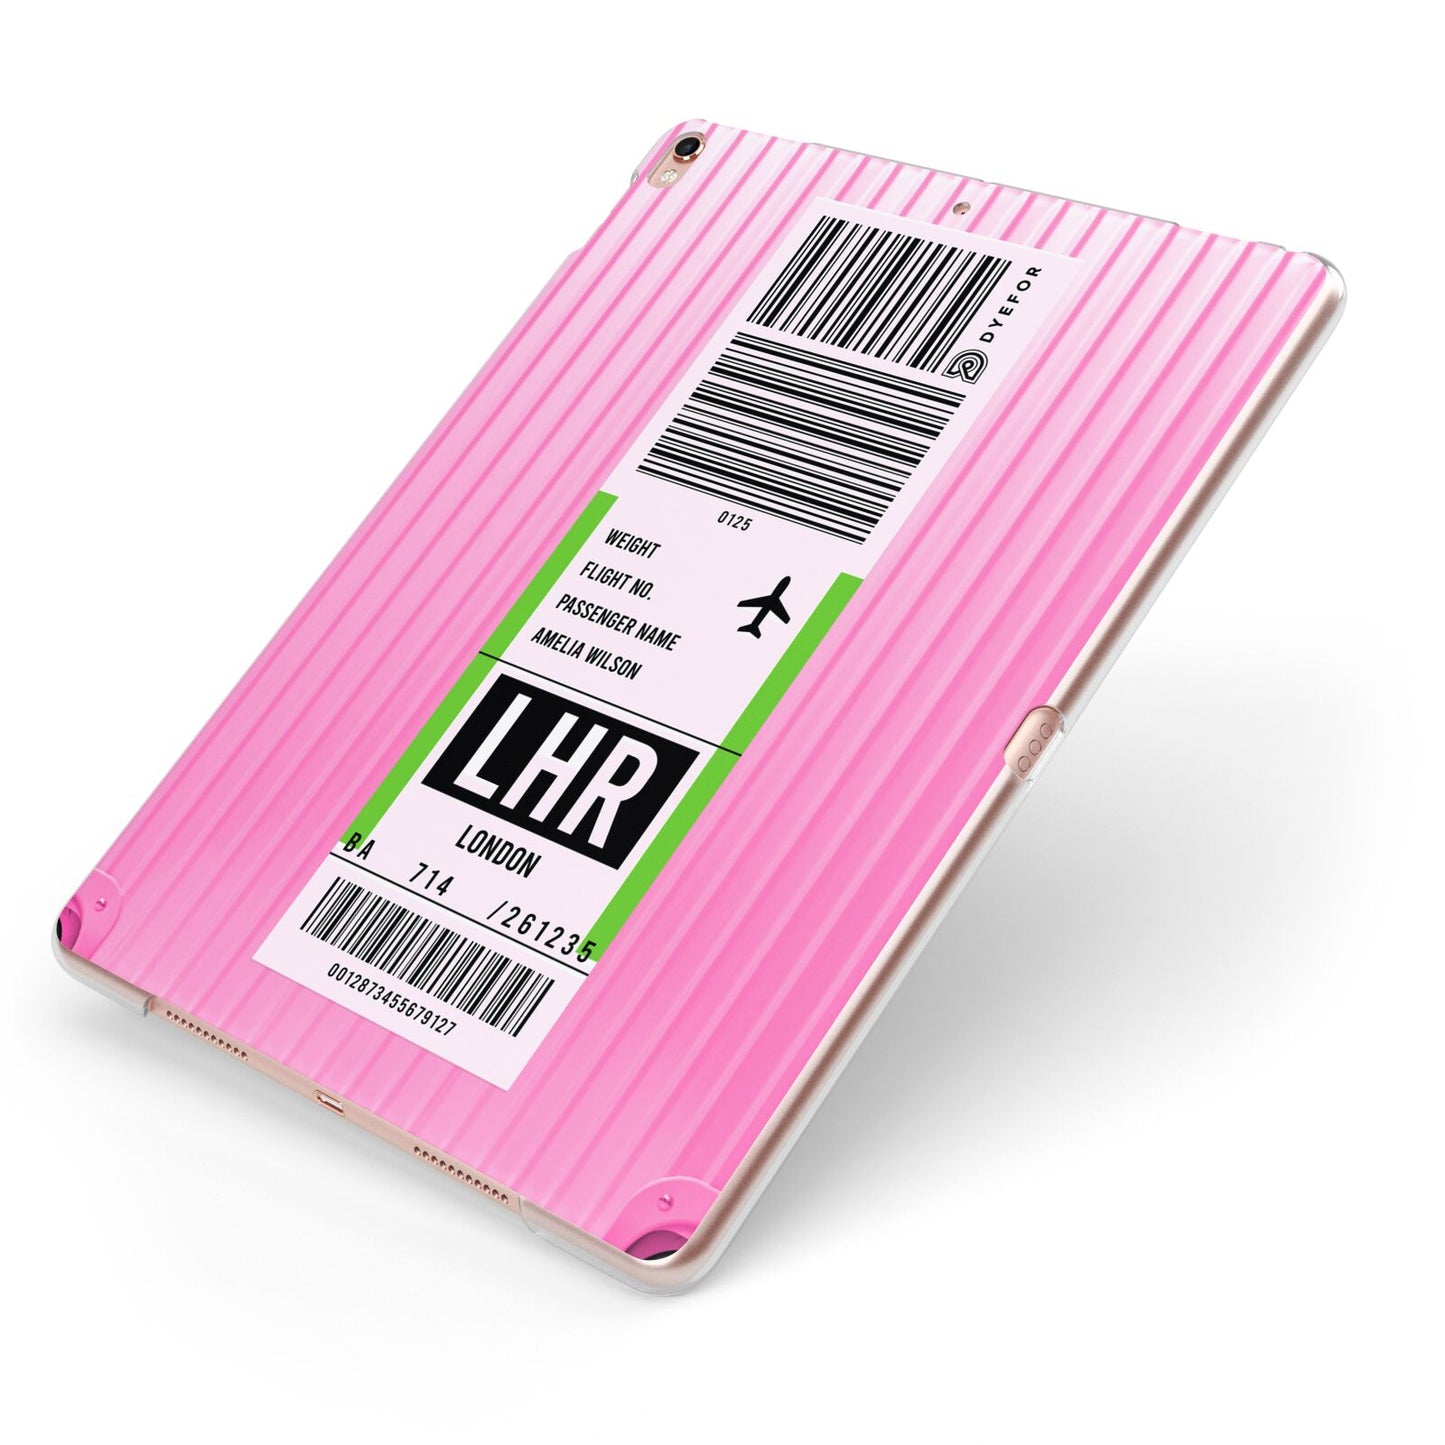 Customised Luggage Tag Apple iPad Case on Rose Gold iPad Side View